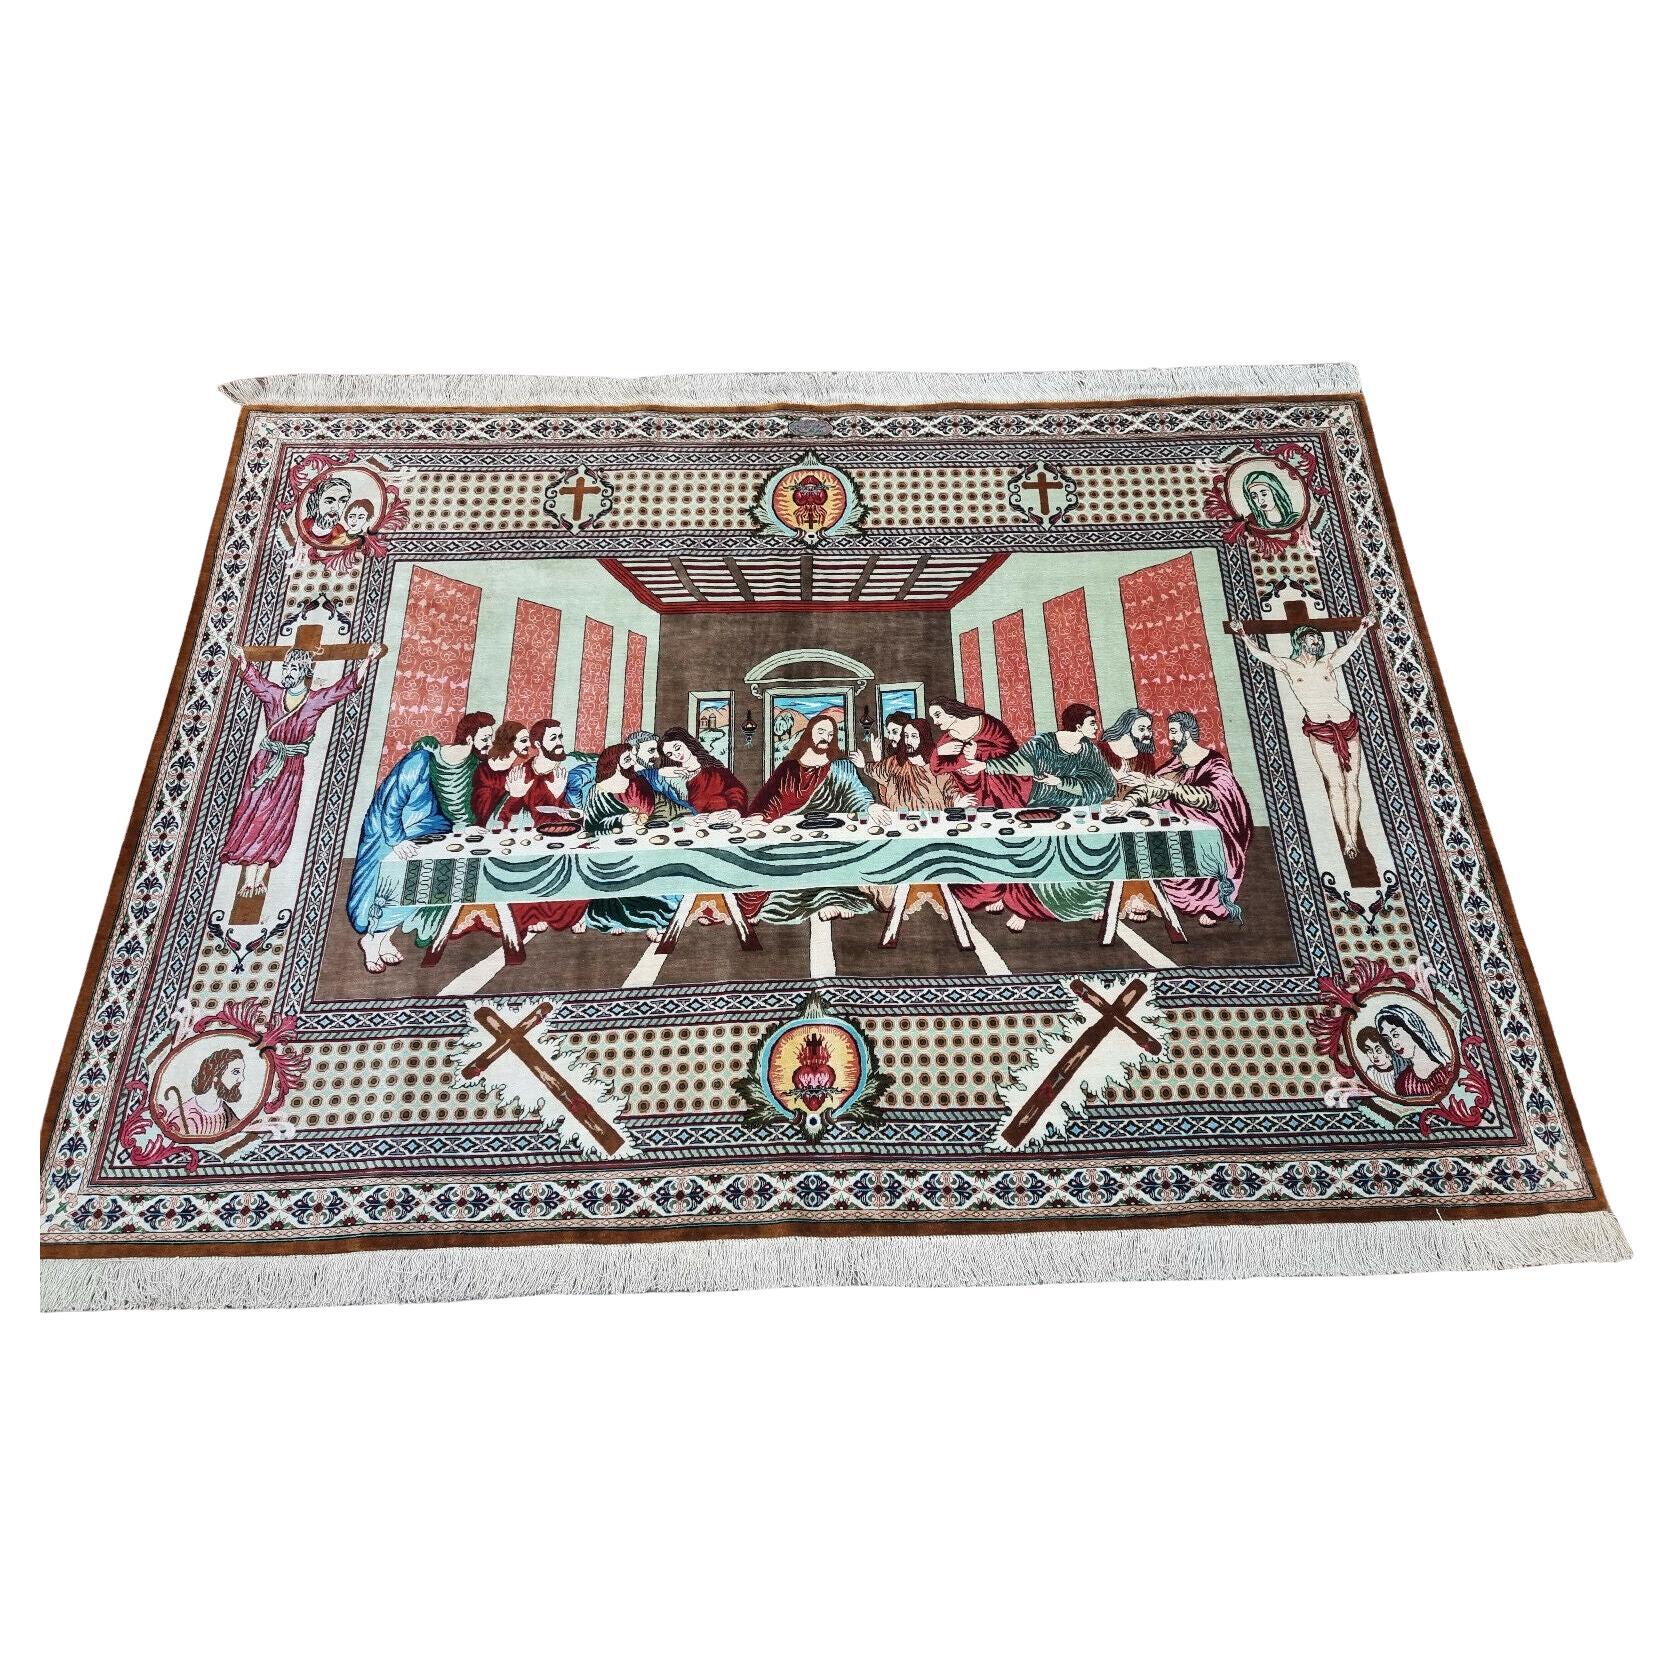 Handmade Vintage Persian Style Qum Silk Rug 4.4' x 6.2', 1970s - 1D81 For Sale